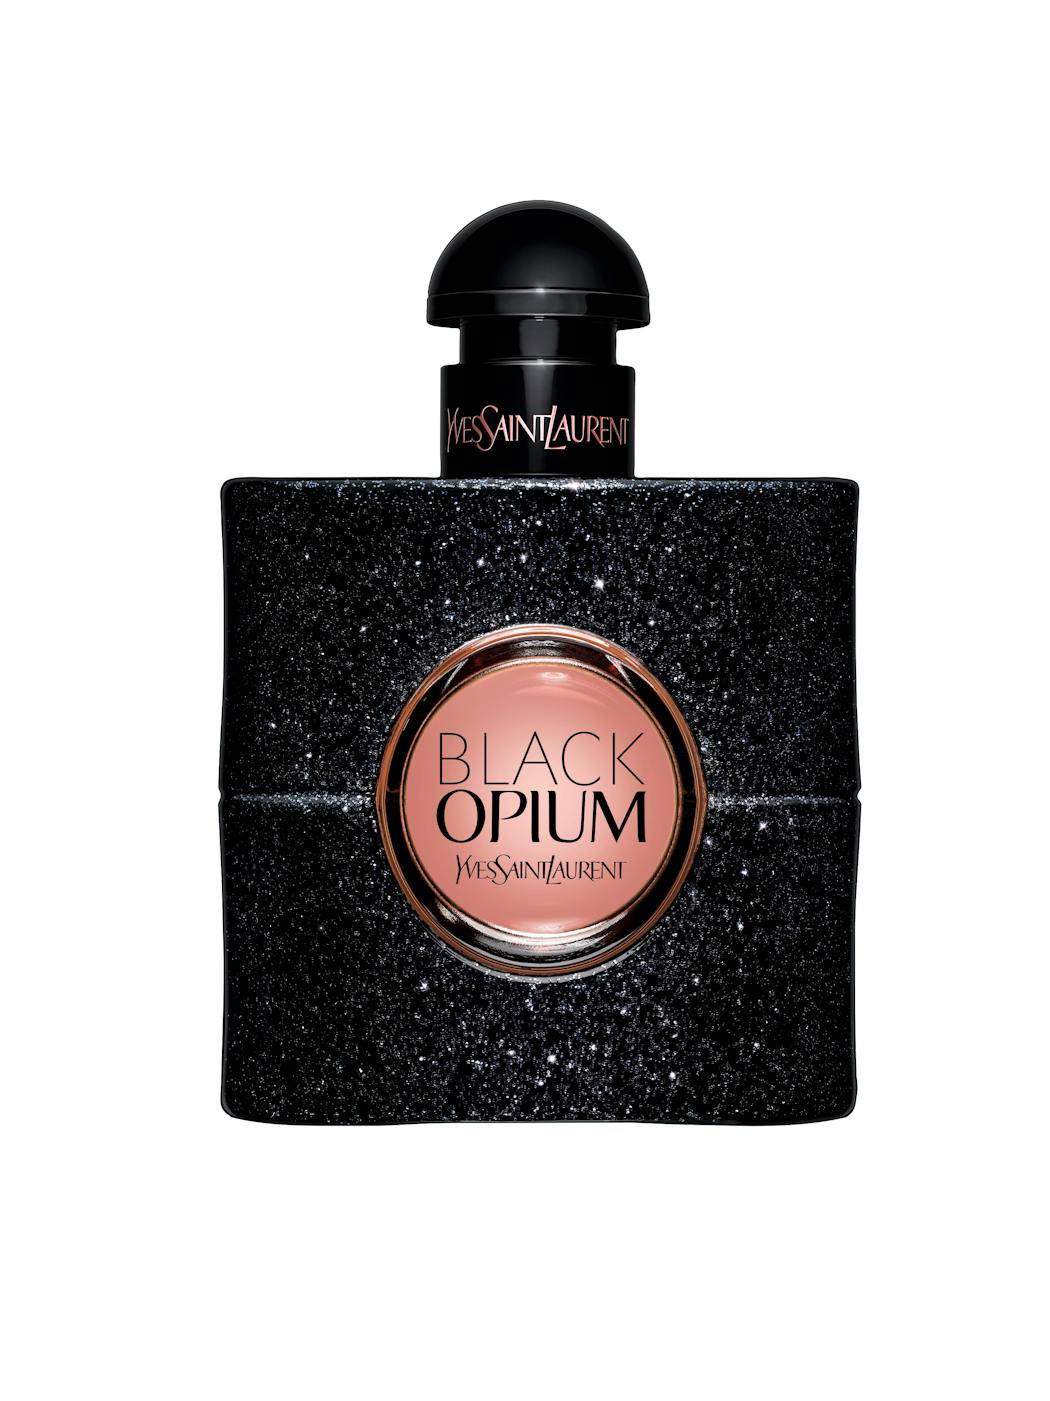 Black Opium, Yves Saint Laurent